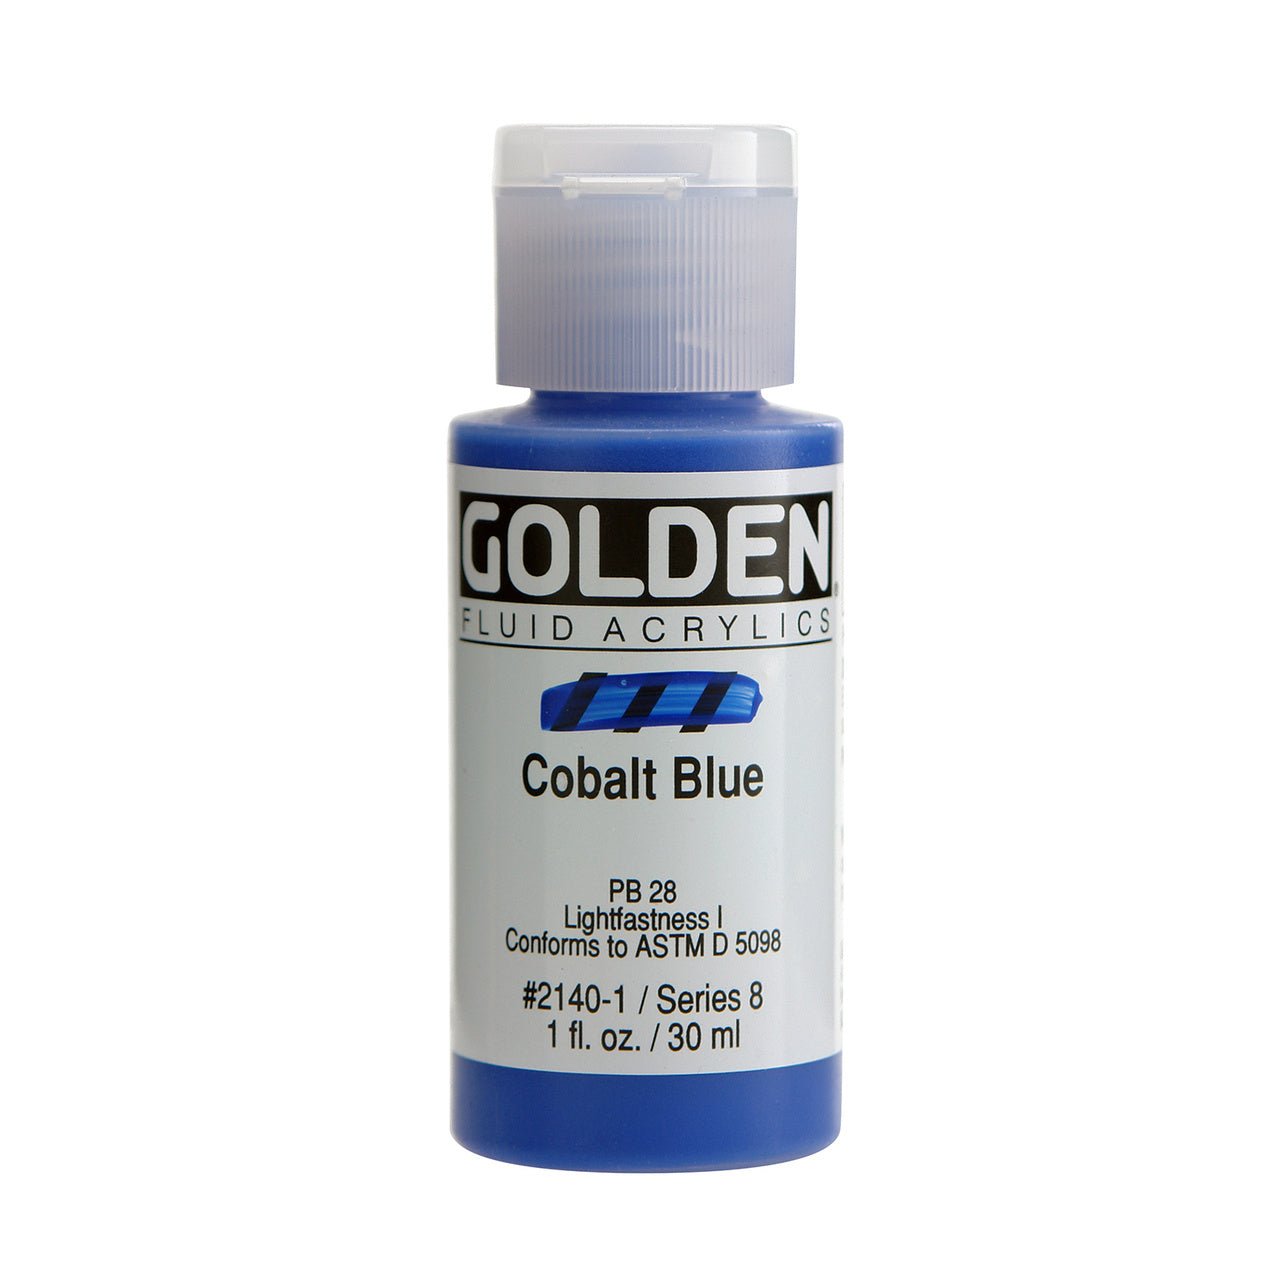 Golden Fluid Acrylic Cobalt Blue 1 oz - merriartist.com